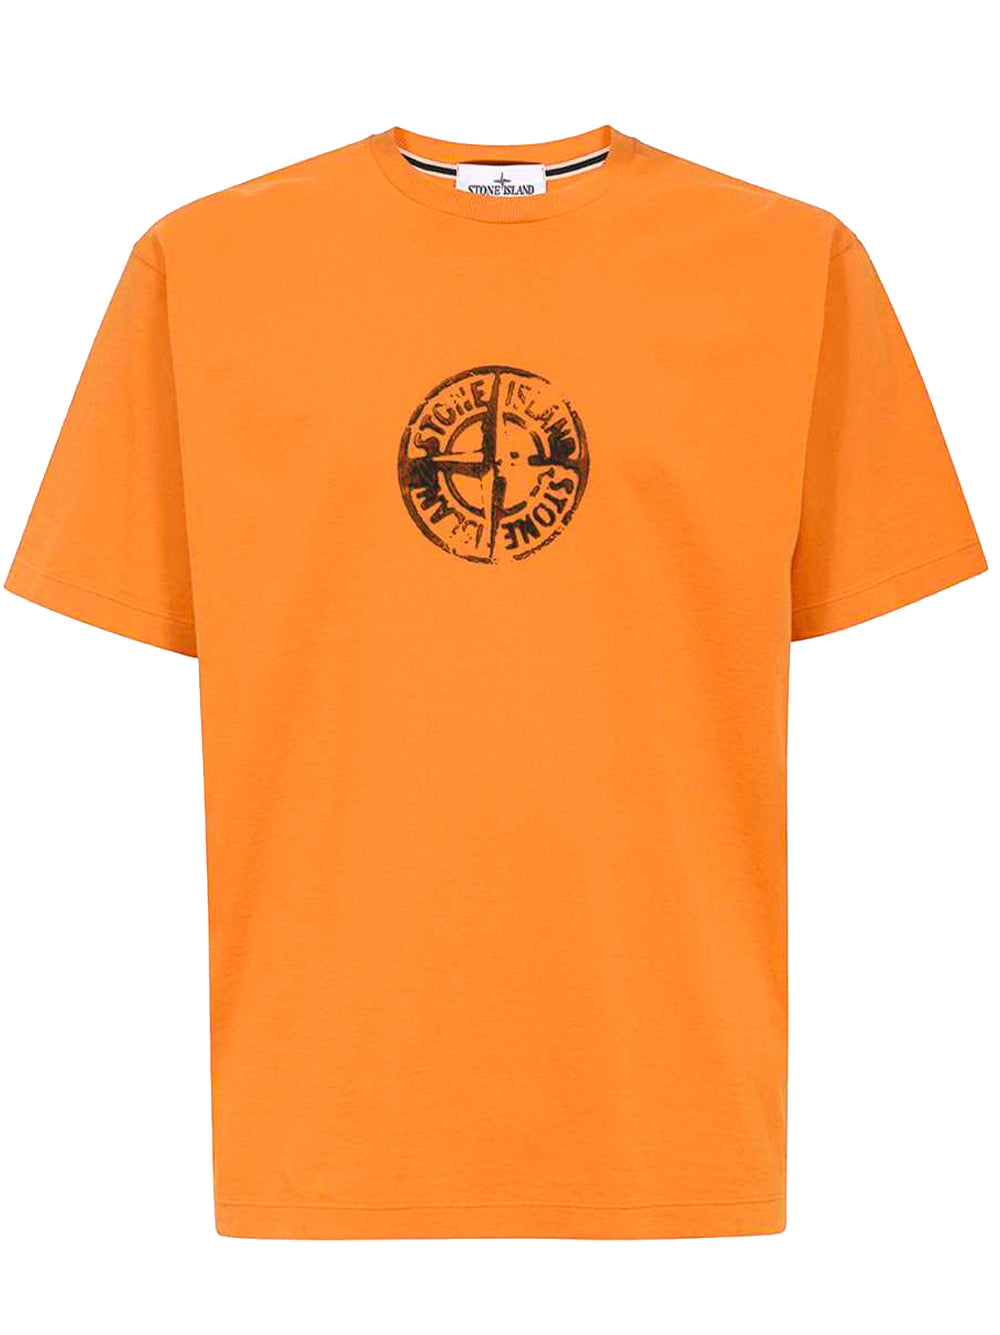 STONE ISLAND - Tee Shirt orange à logo central